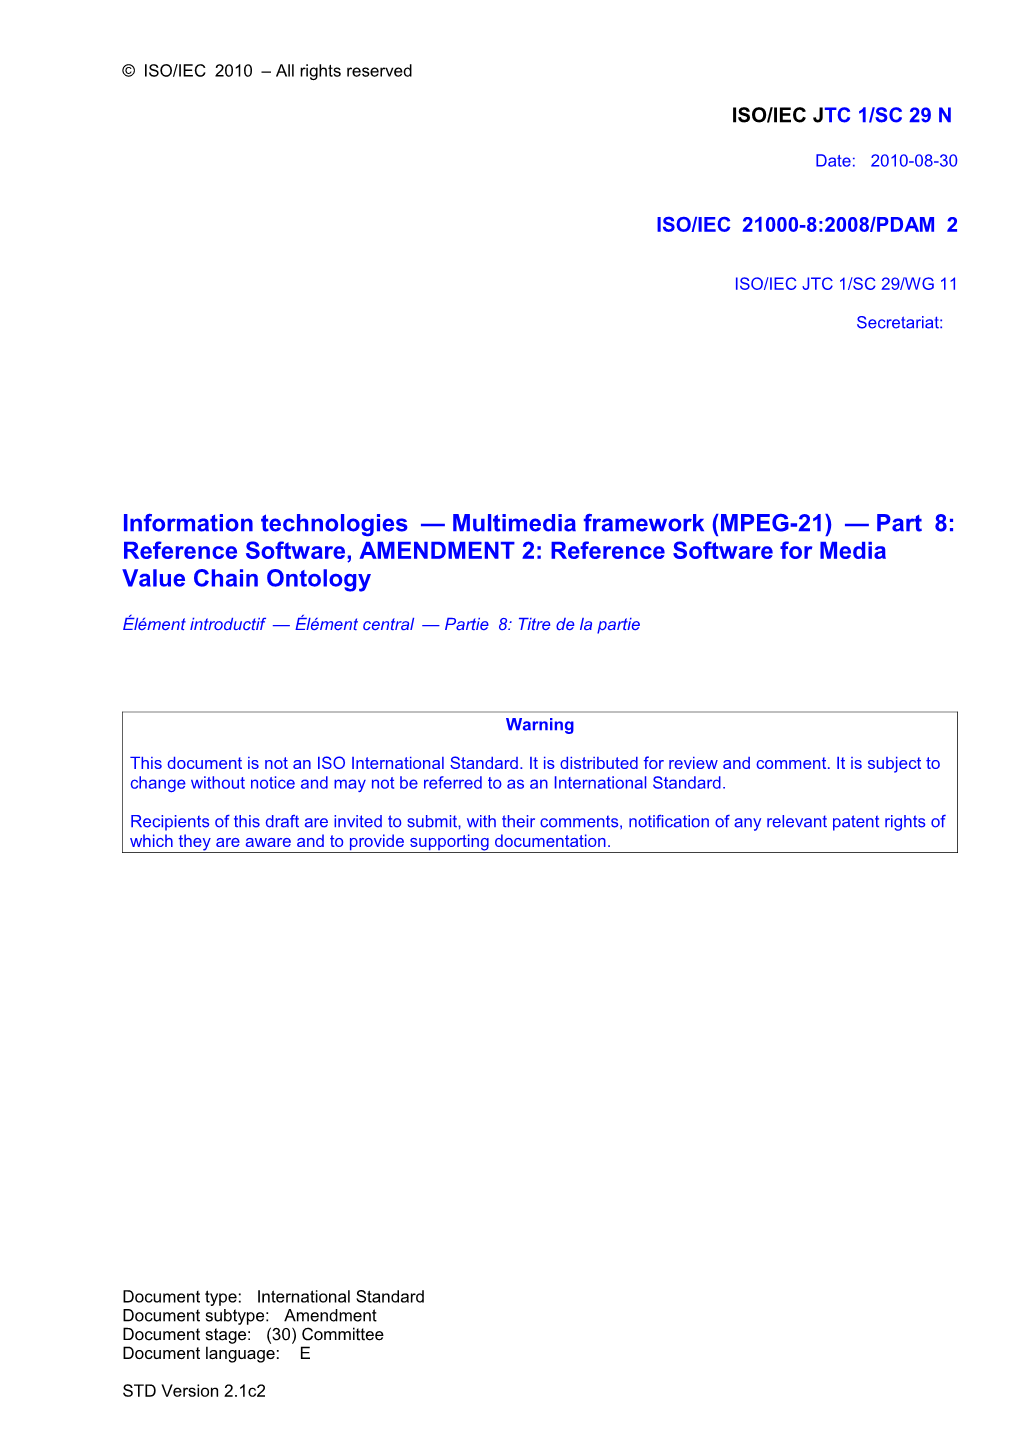 Information Technologies Multimedia Framework (MPEG-21) Part8: Reference Software, AMENDMENT